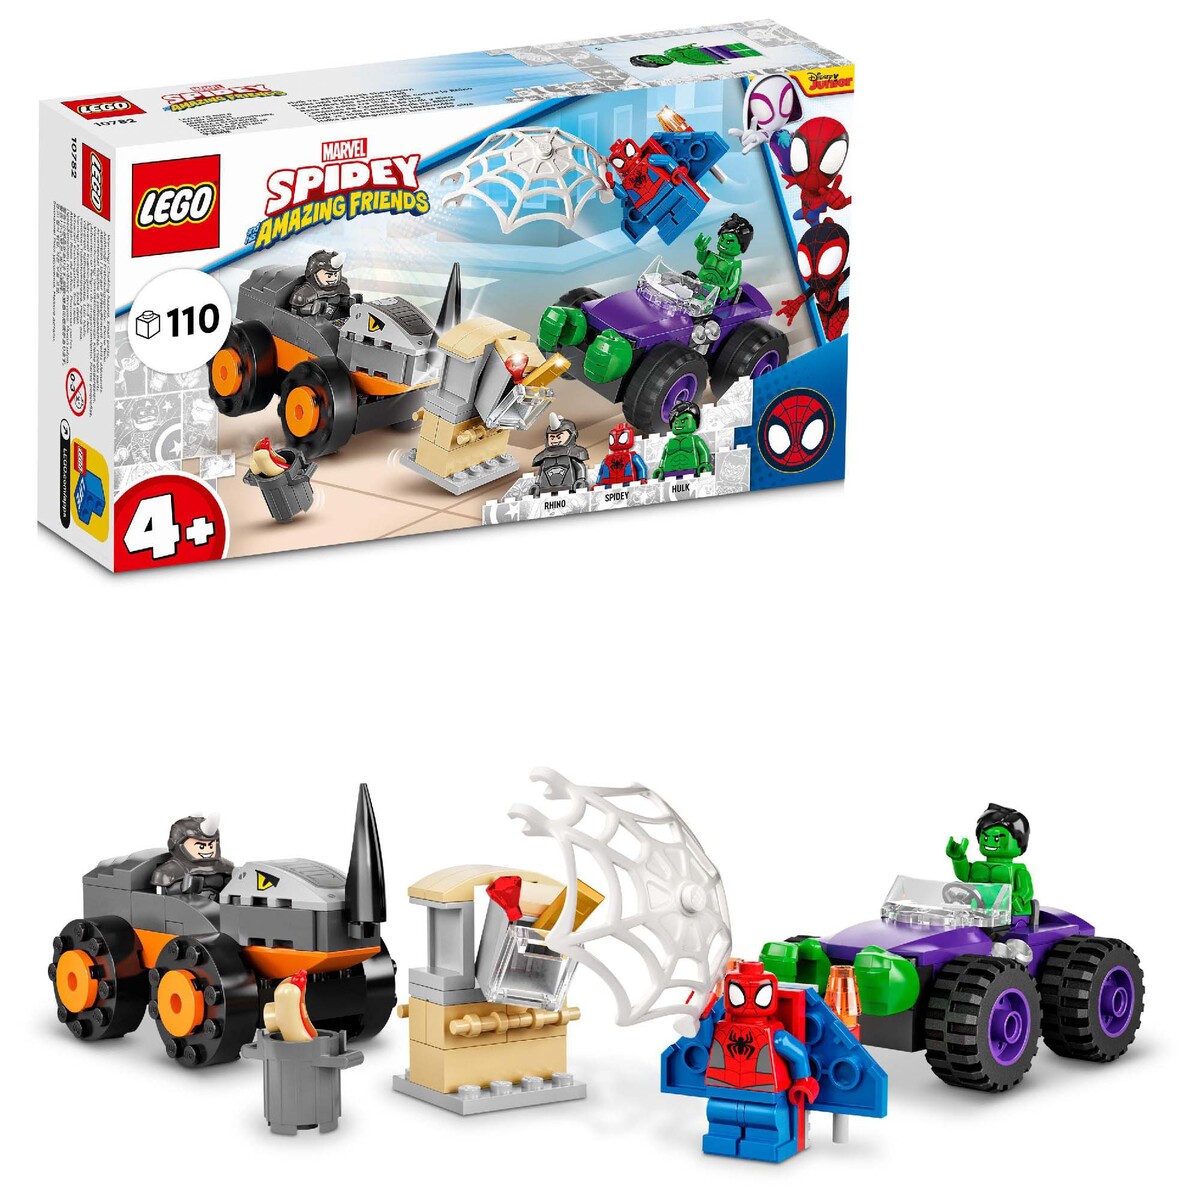 Lego Hulk vs. Rhino Truck Showdown 10782